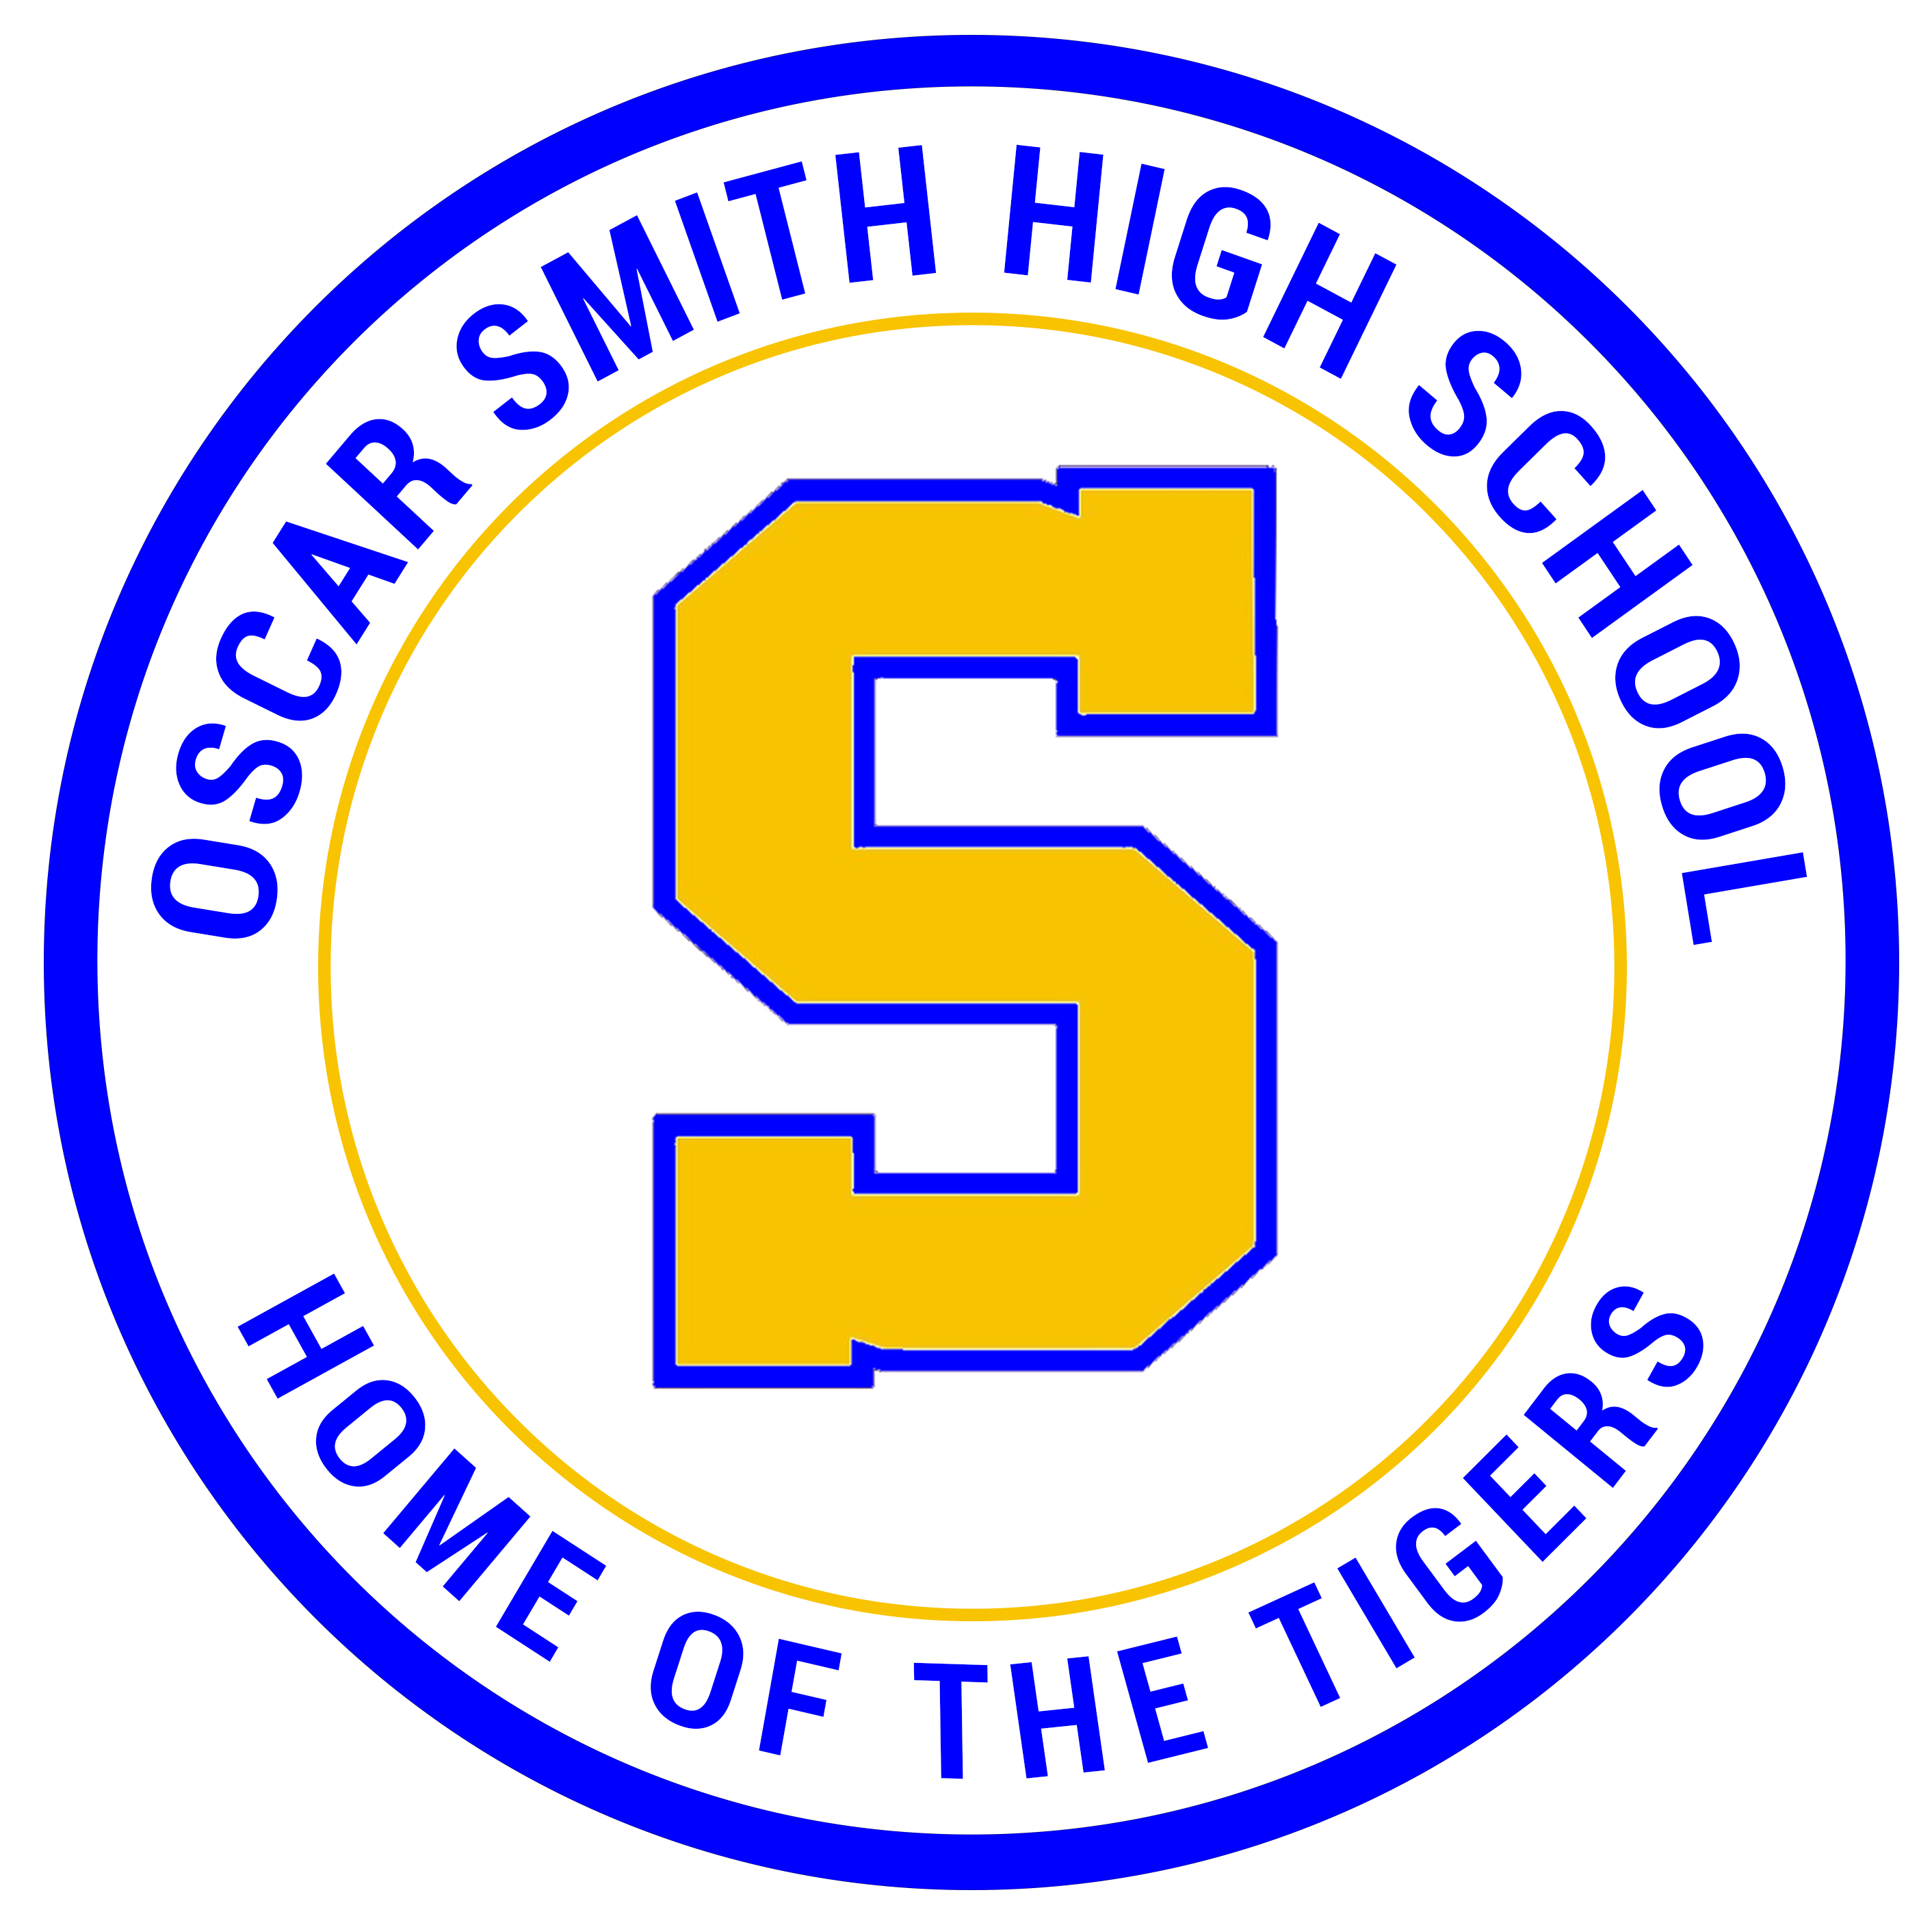 Oscar Smith High School Home of the Tigers